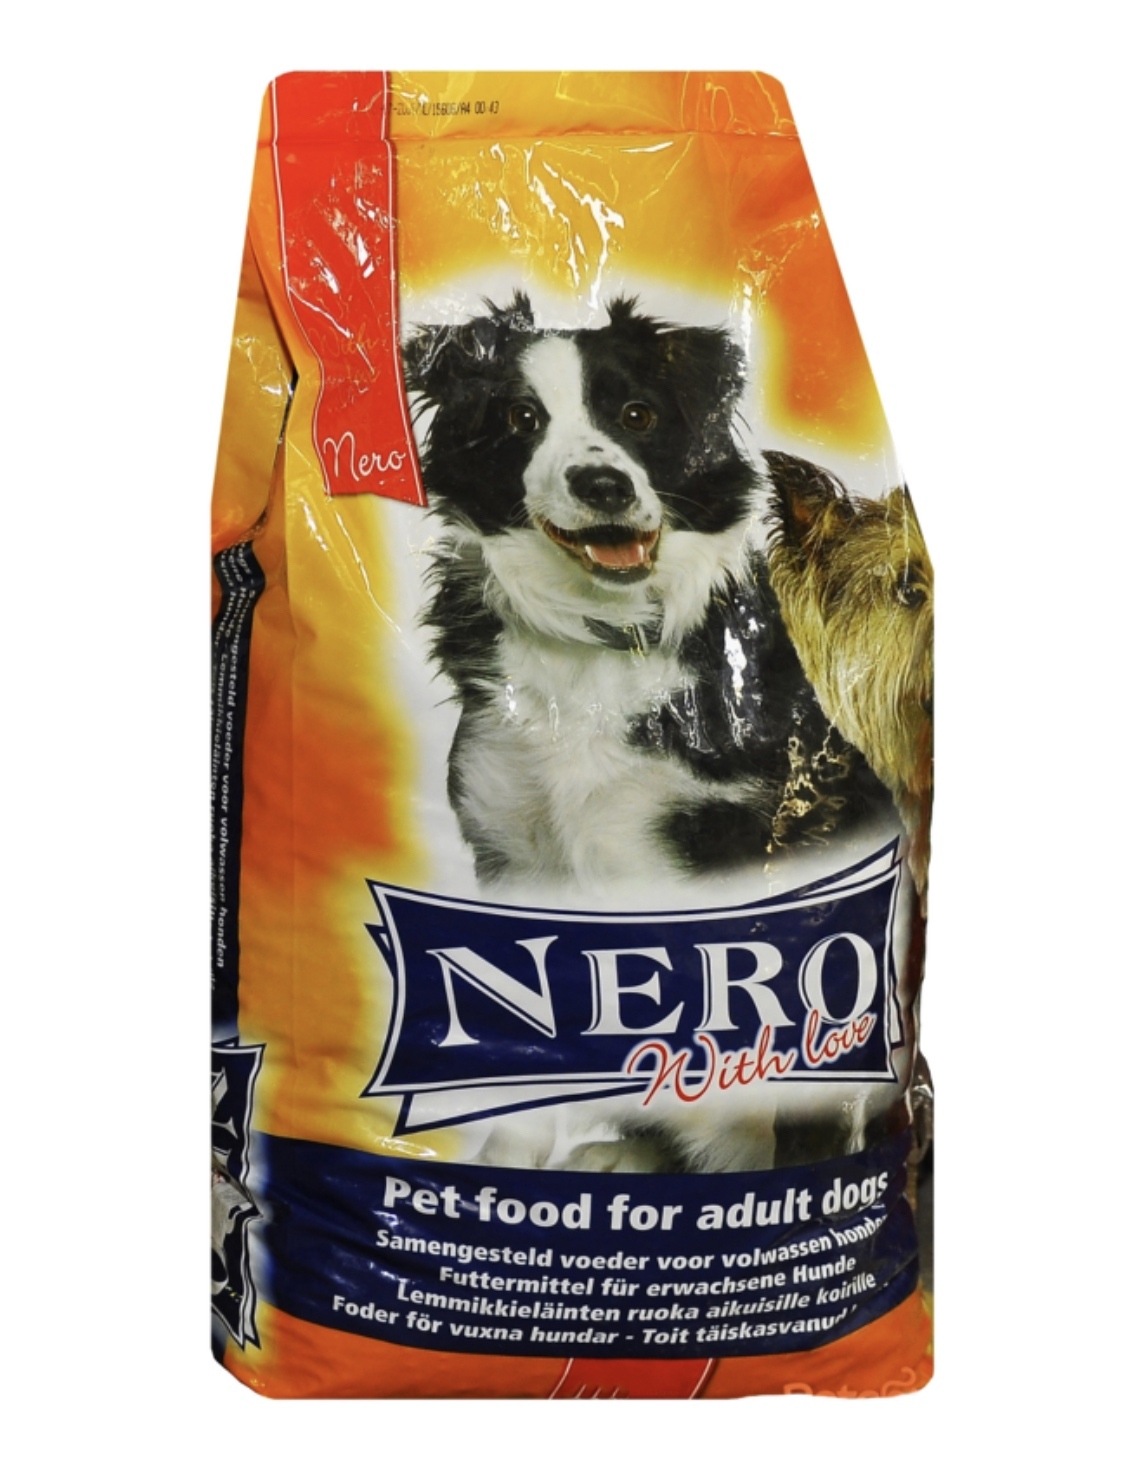 Килограмм корма для собак. Неро Голд корм для собак. Корм Неро Голд для пожилых собак собак. Неро Голд мясной коктейль 18 кг. Nero with Love корм для собак 18 кг.